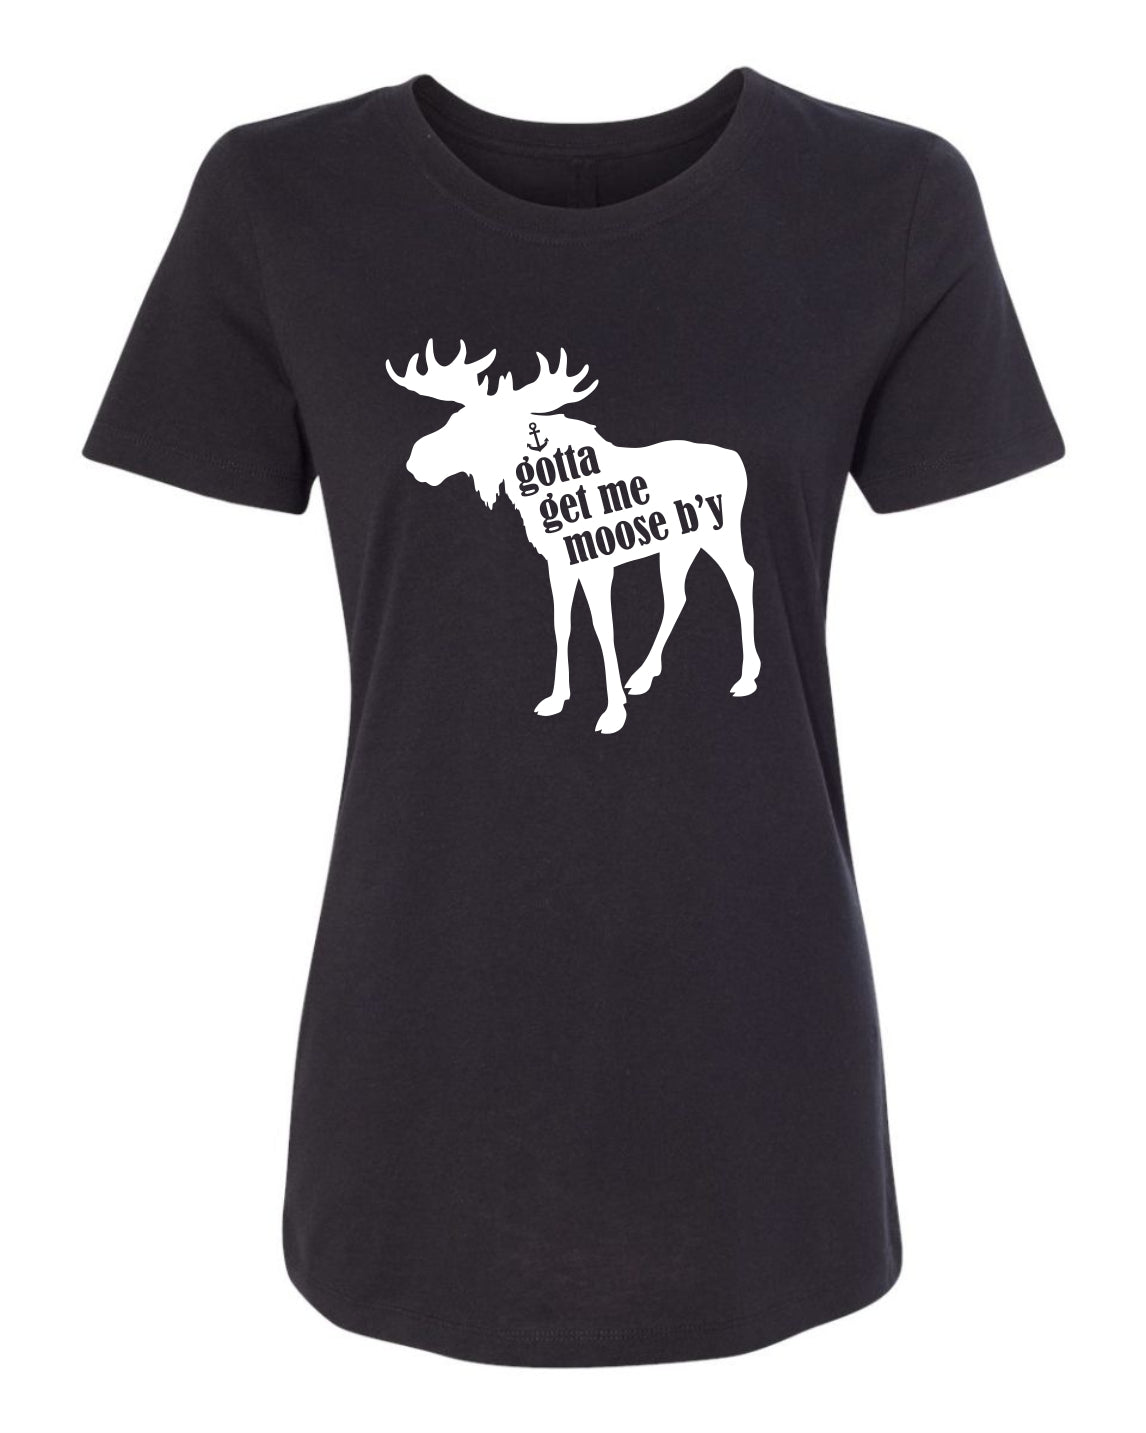 "Gotta get me moose b'y" T-Shirt